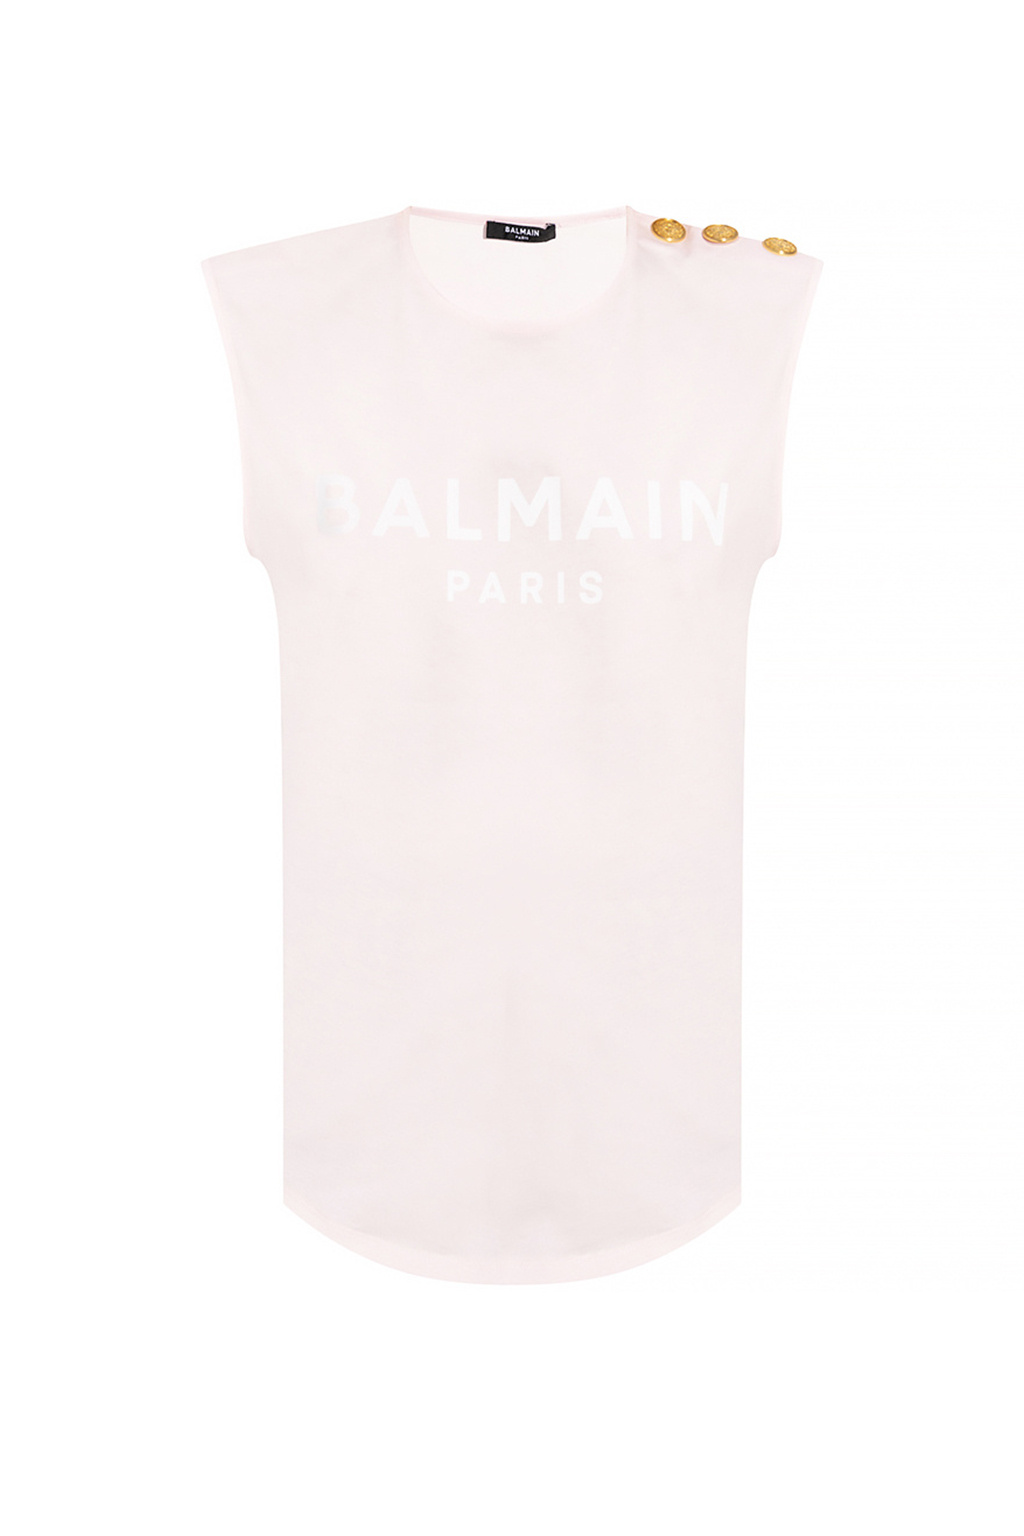 Balmain Sleeveless top with logo | Women's Clothing | Vitkac